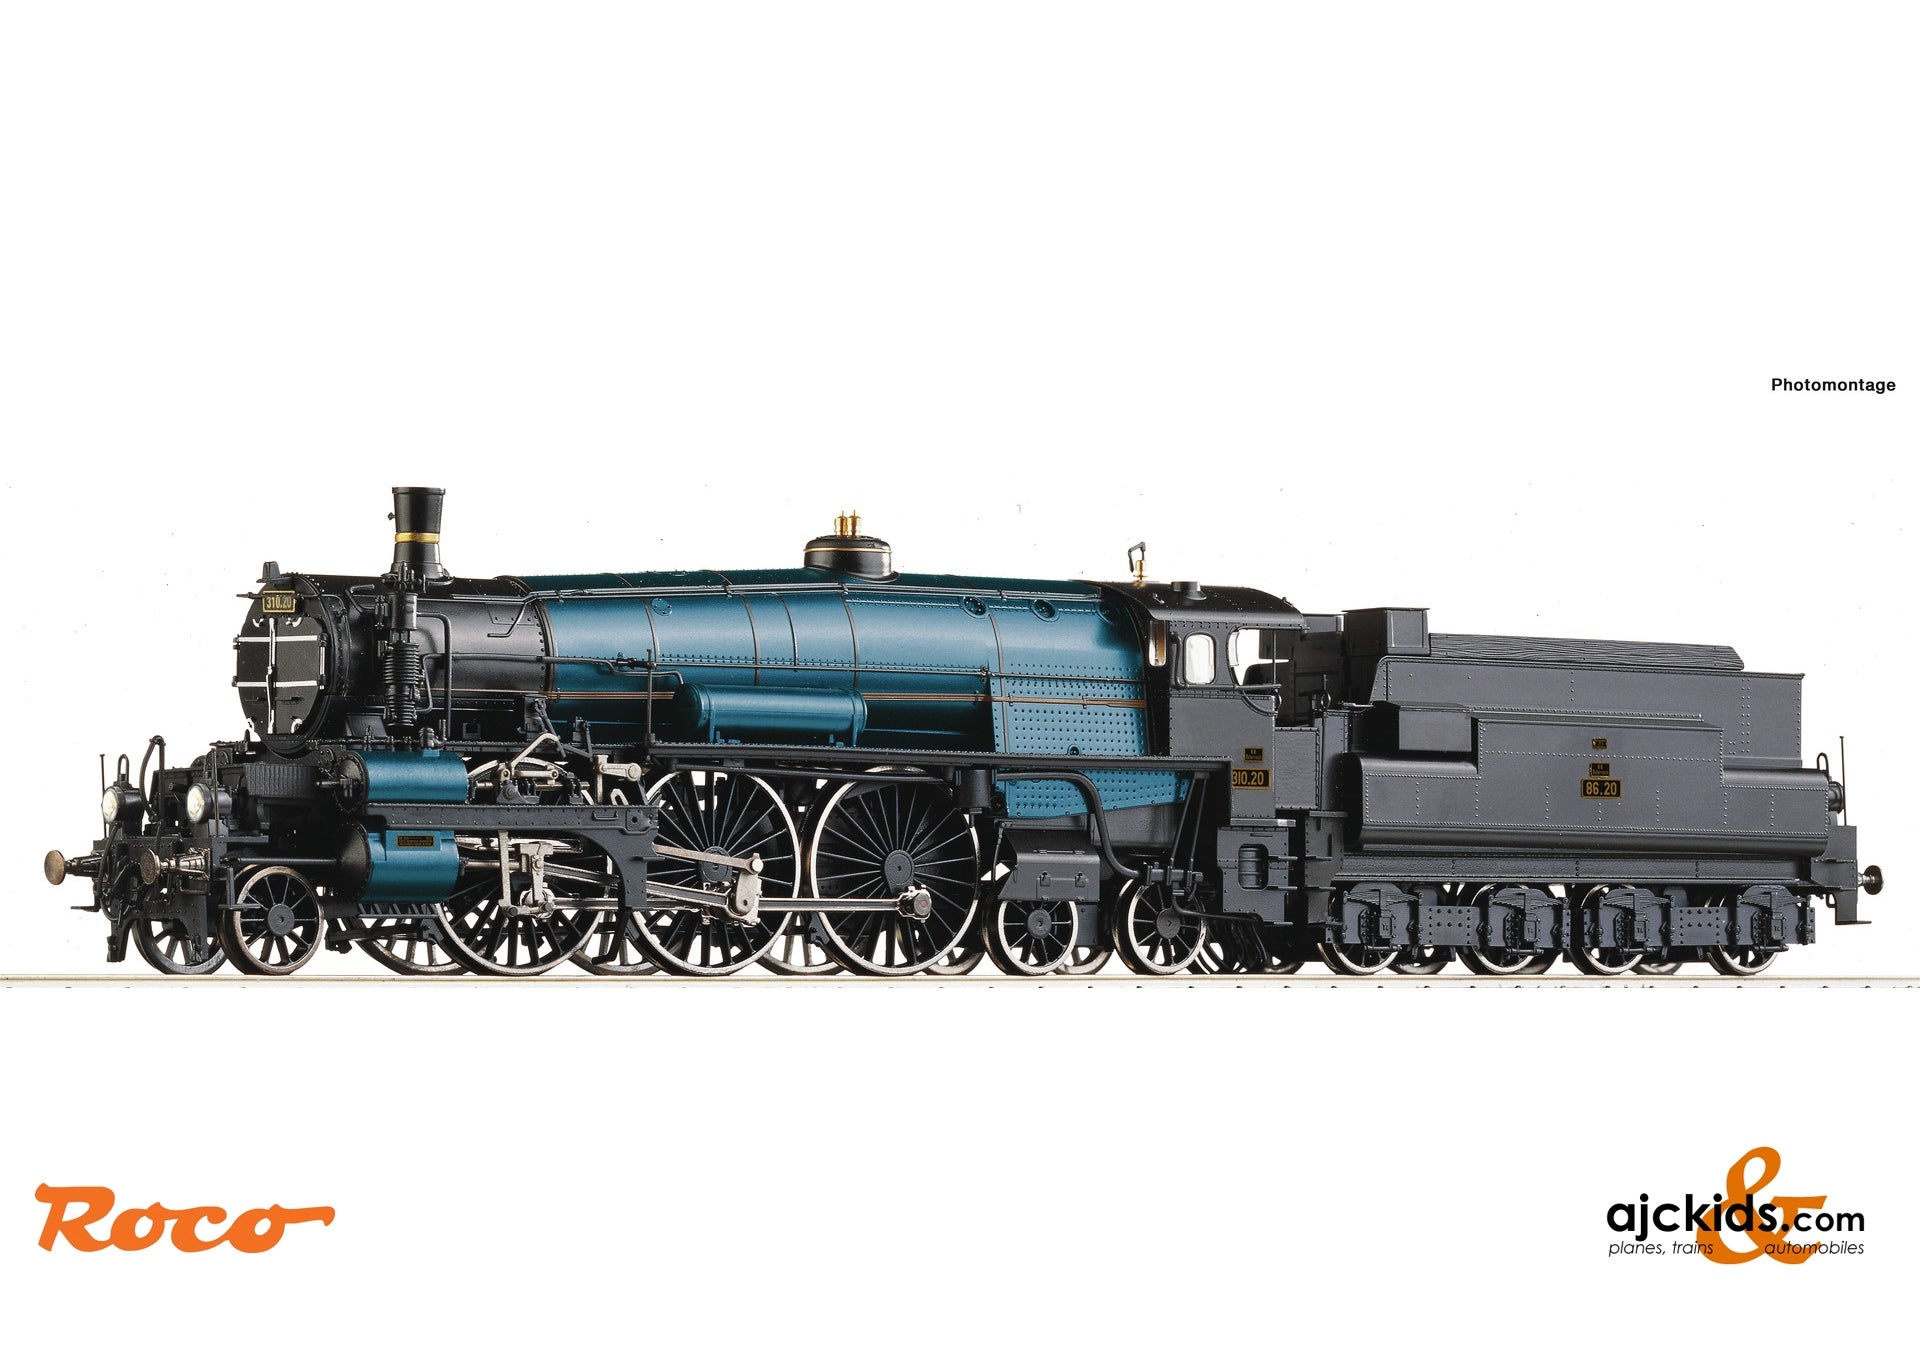 Roco 78331 - Steam locomotive 310.20, BBÖ at Ajckids.com